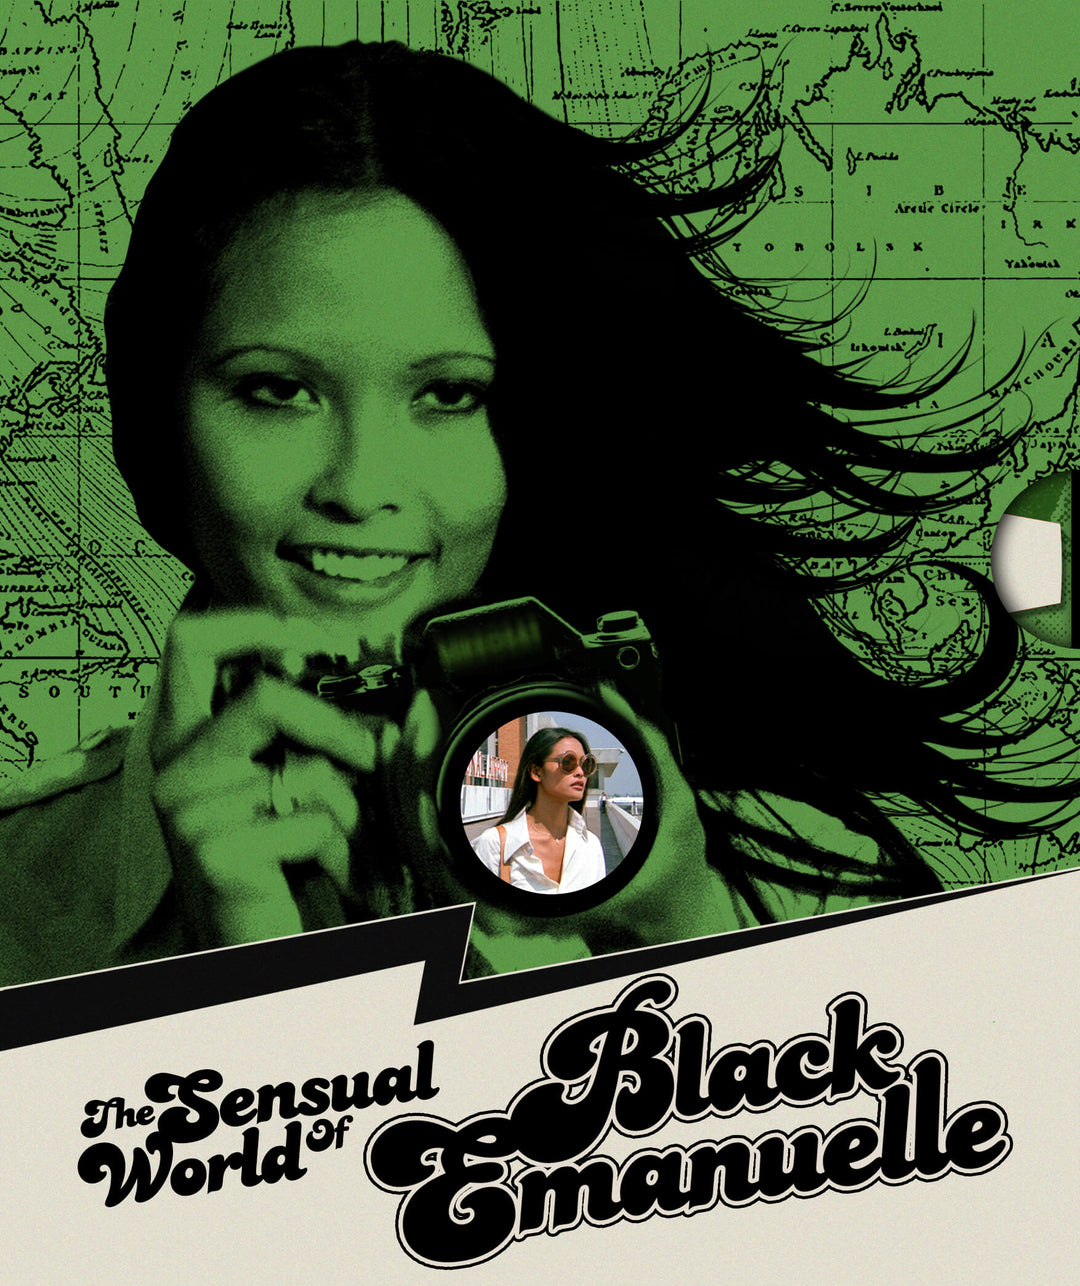 The Sensual World of Black Emanuelle